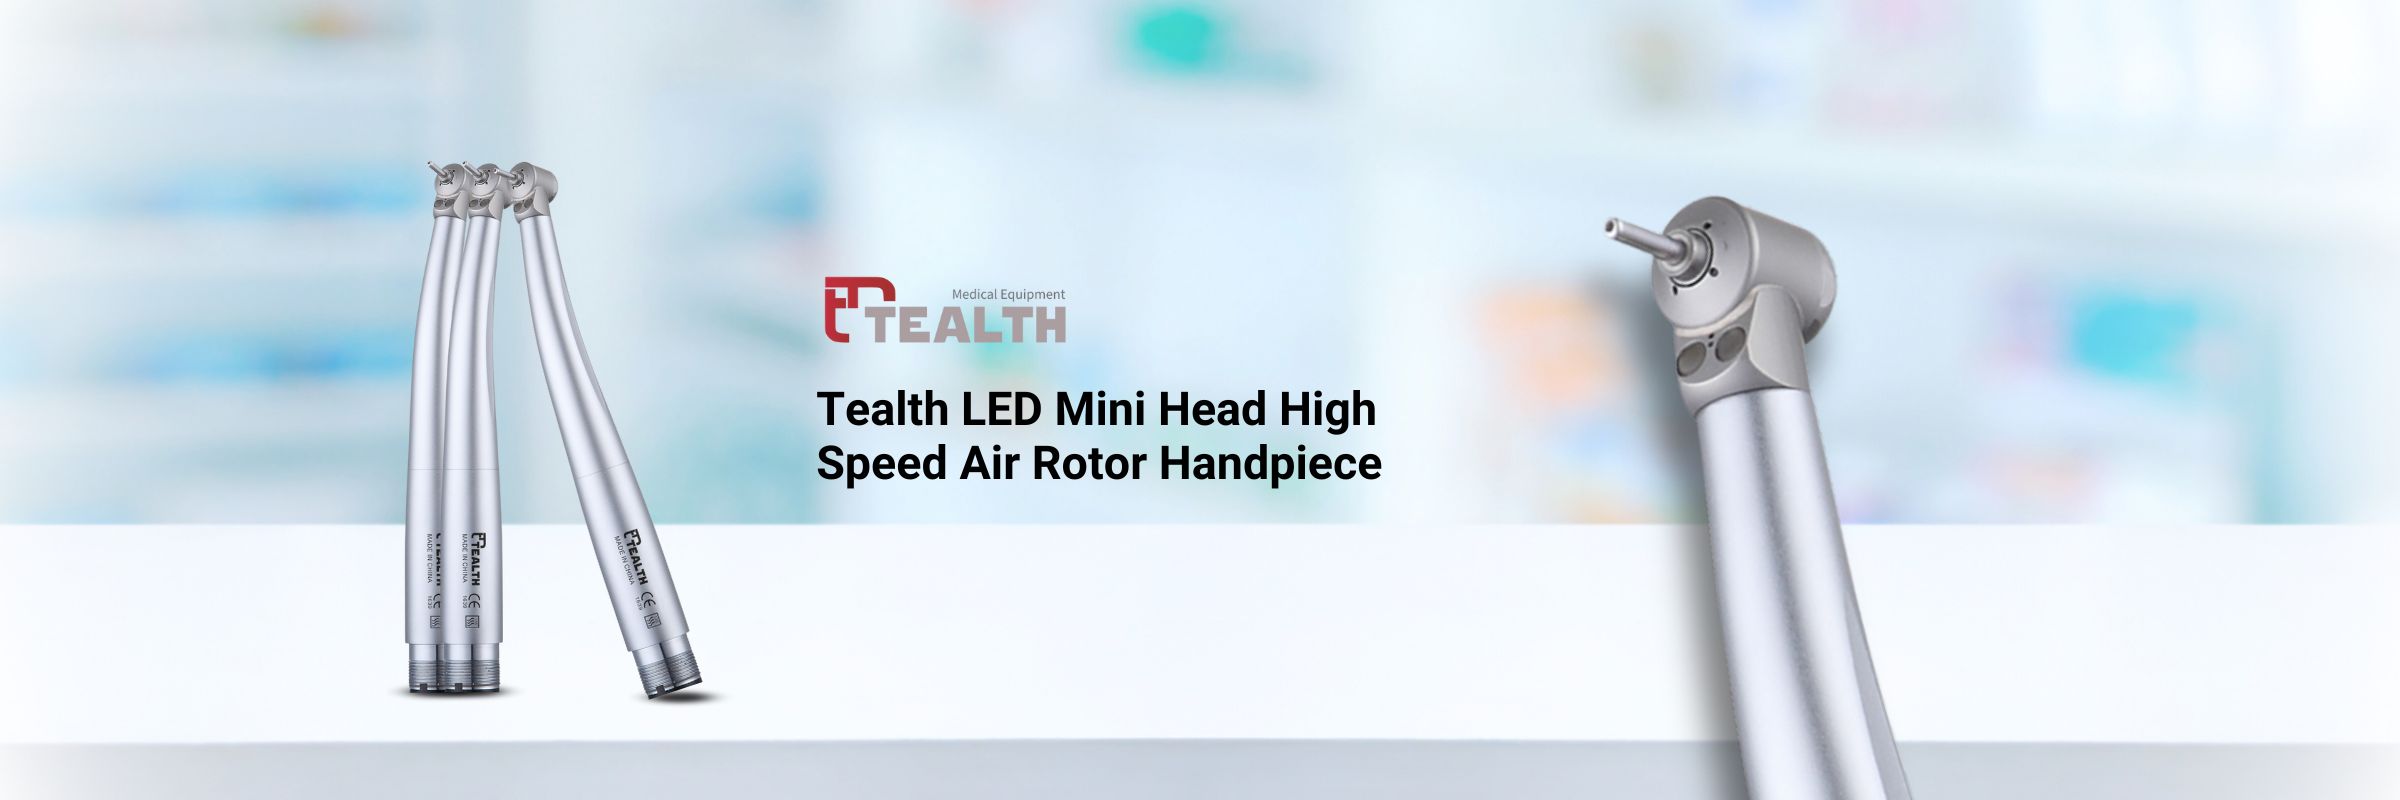 Tealth LED Mini Head High Speed Air Rotor Handpiece